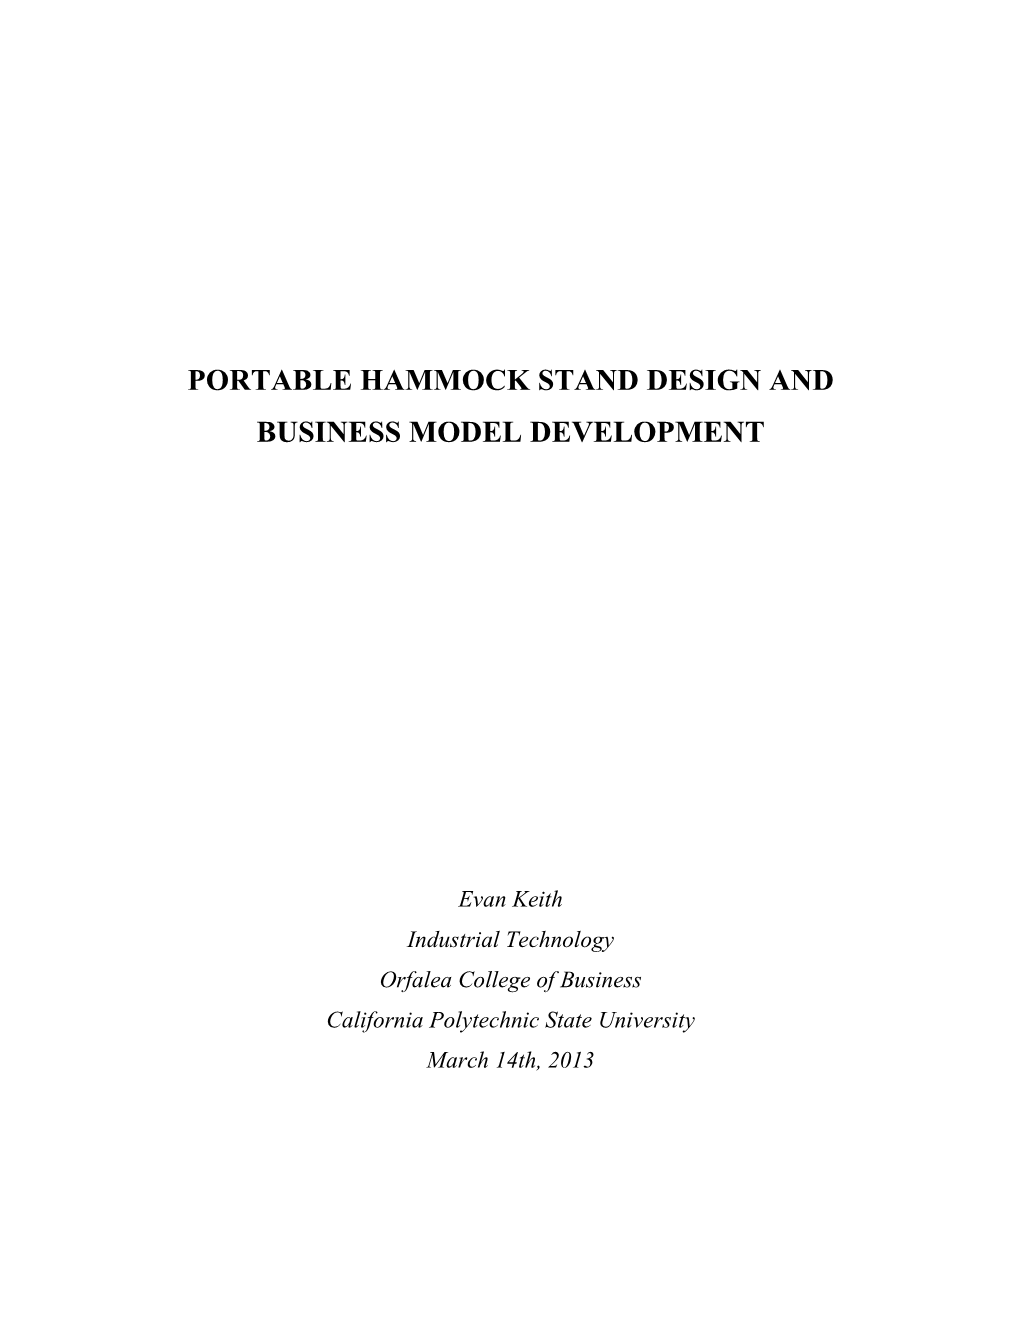 Portable Hammock Stand Design and Business Model Development